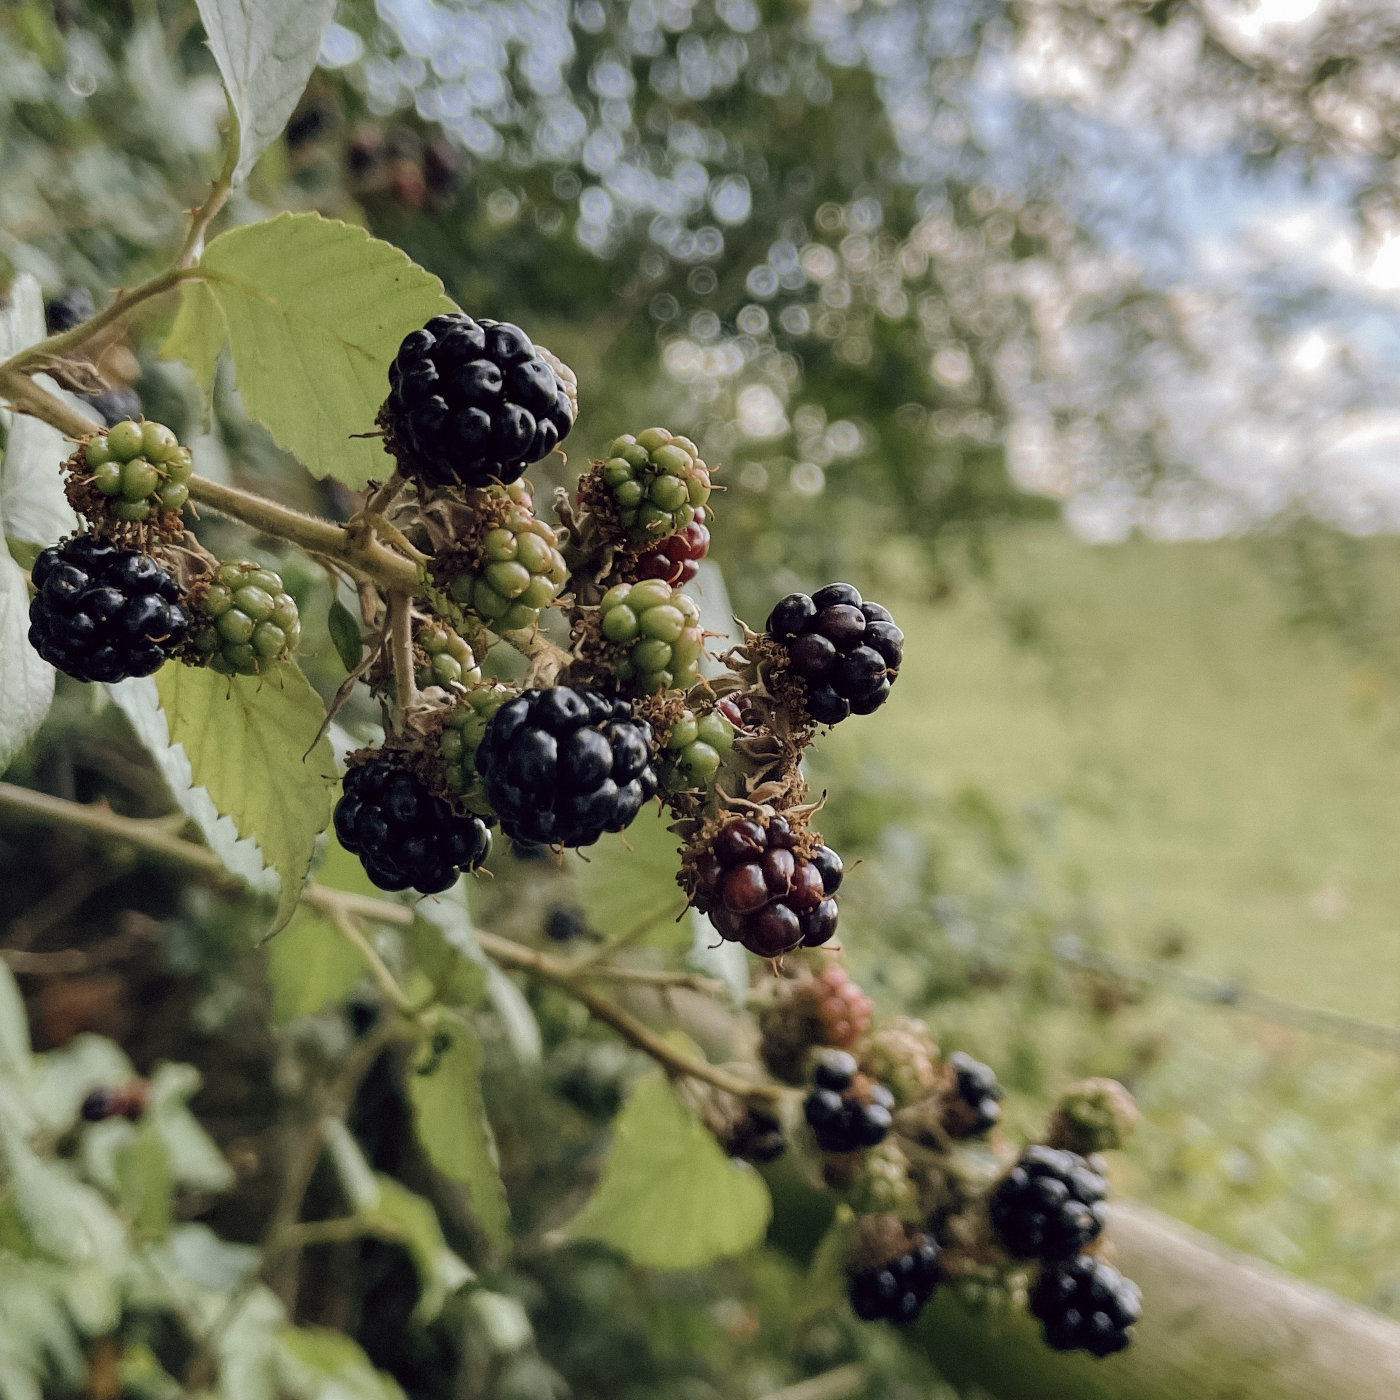 When are blackberries in season?